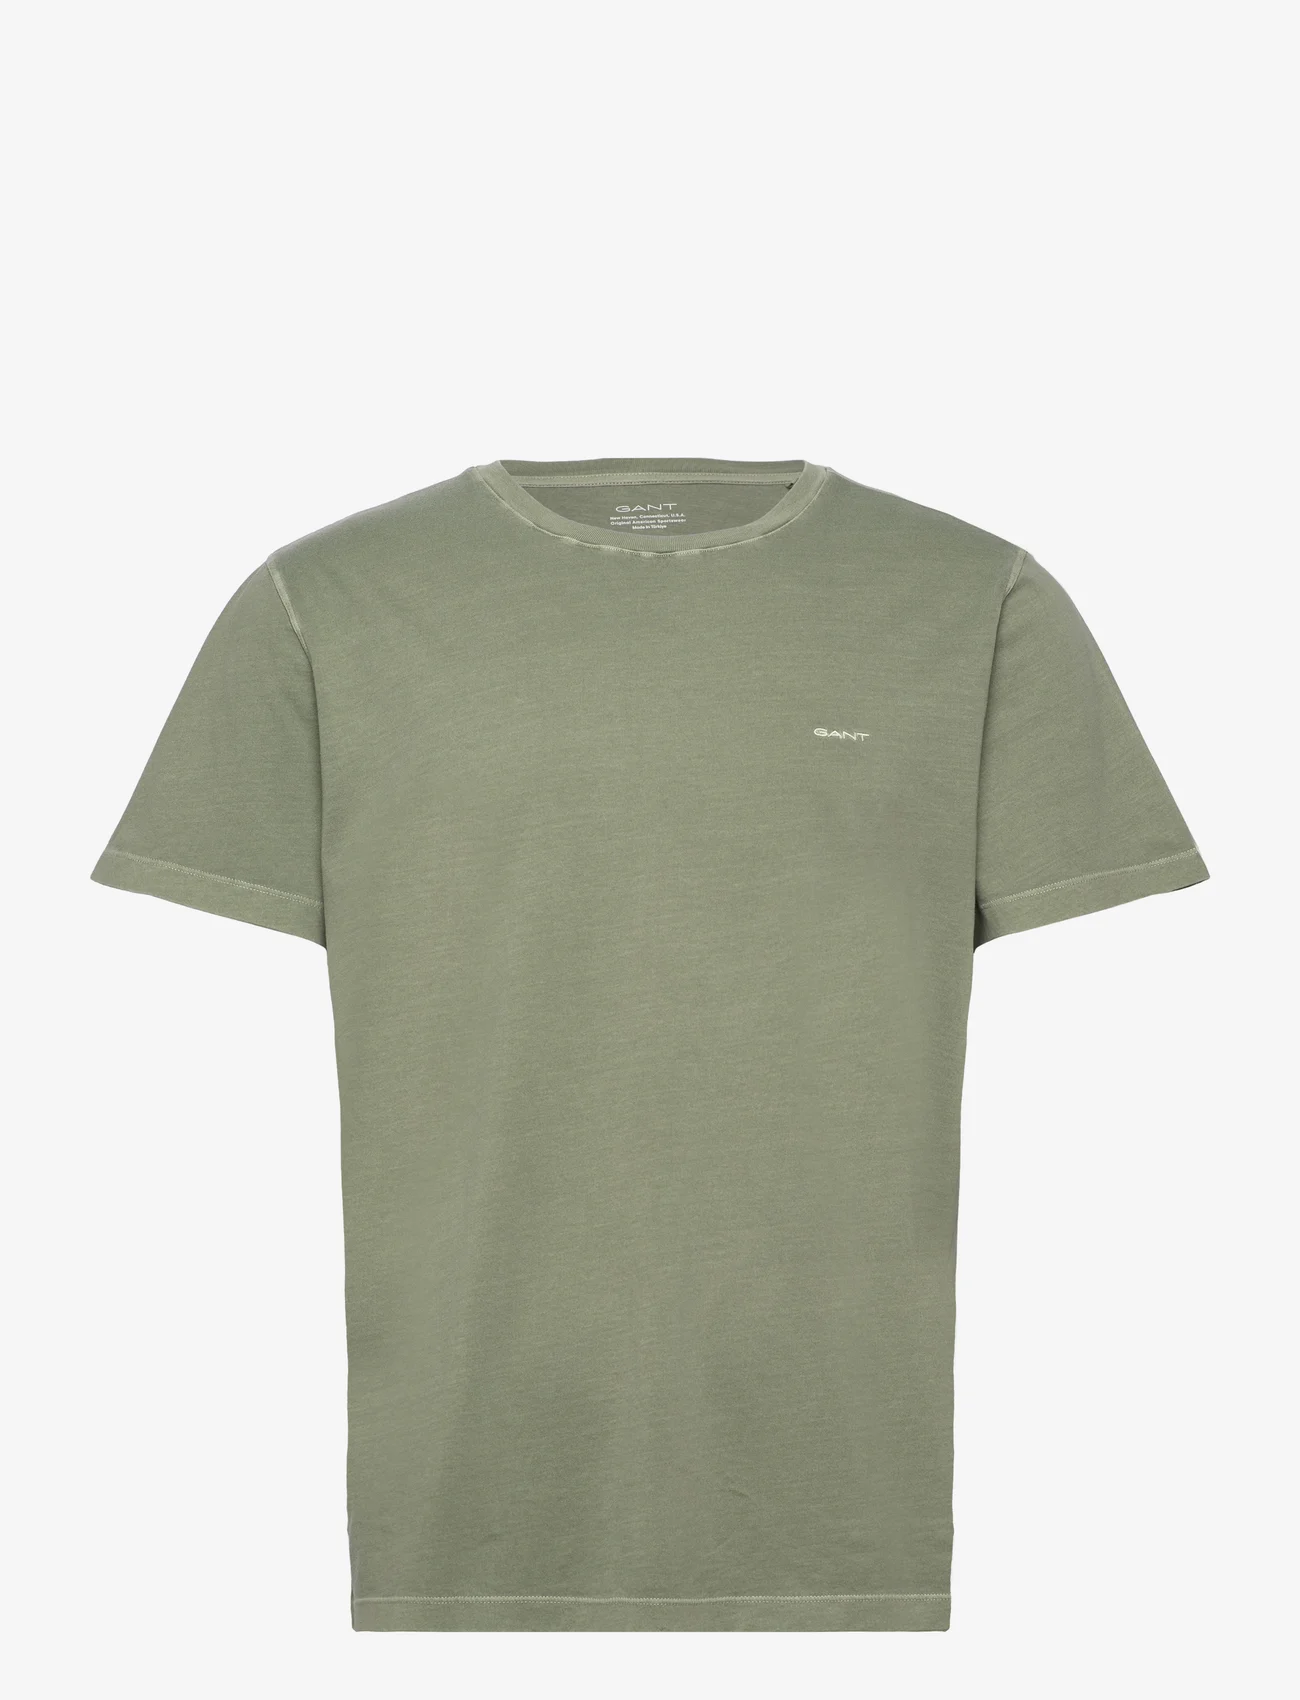 GANT - SUNFADED SS T-SHIRT - basic t-shirts - kalamata green - 0